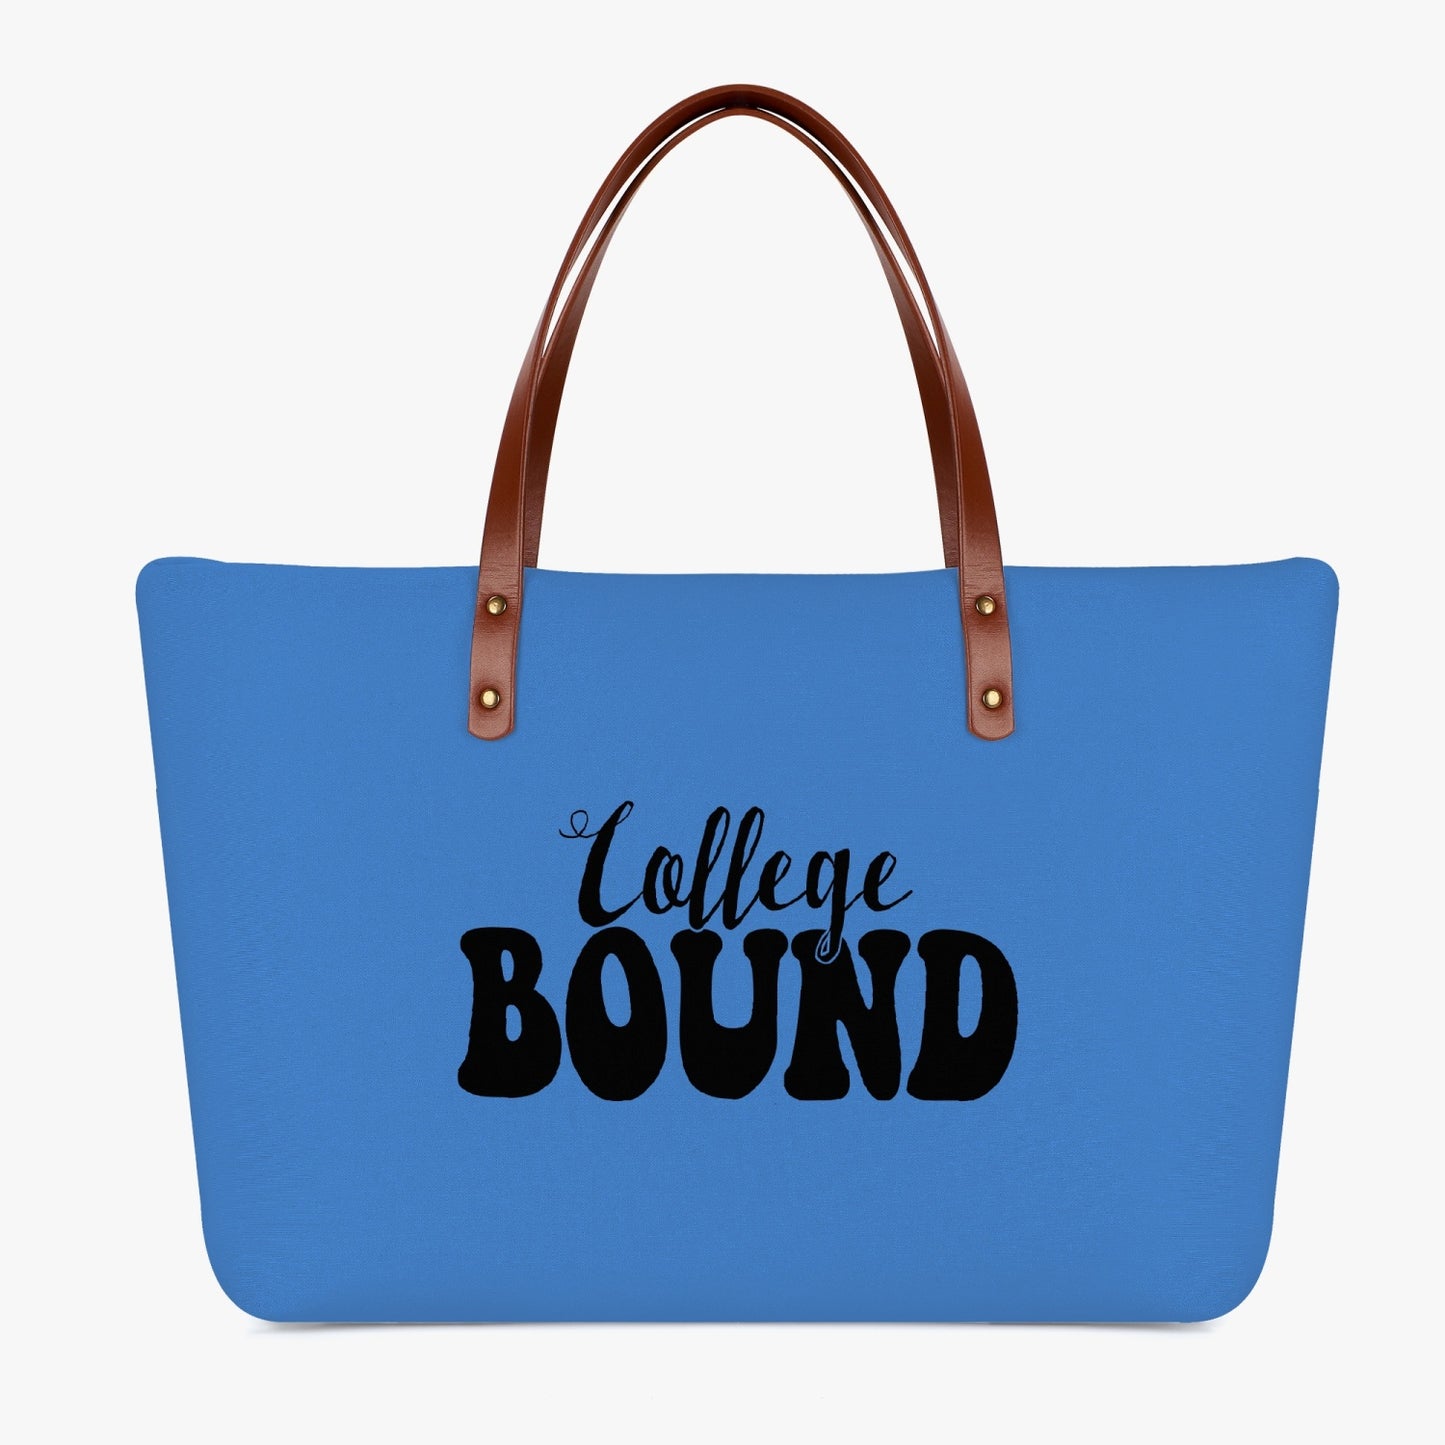 College Bound Tote Bag